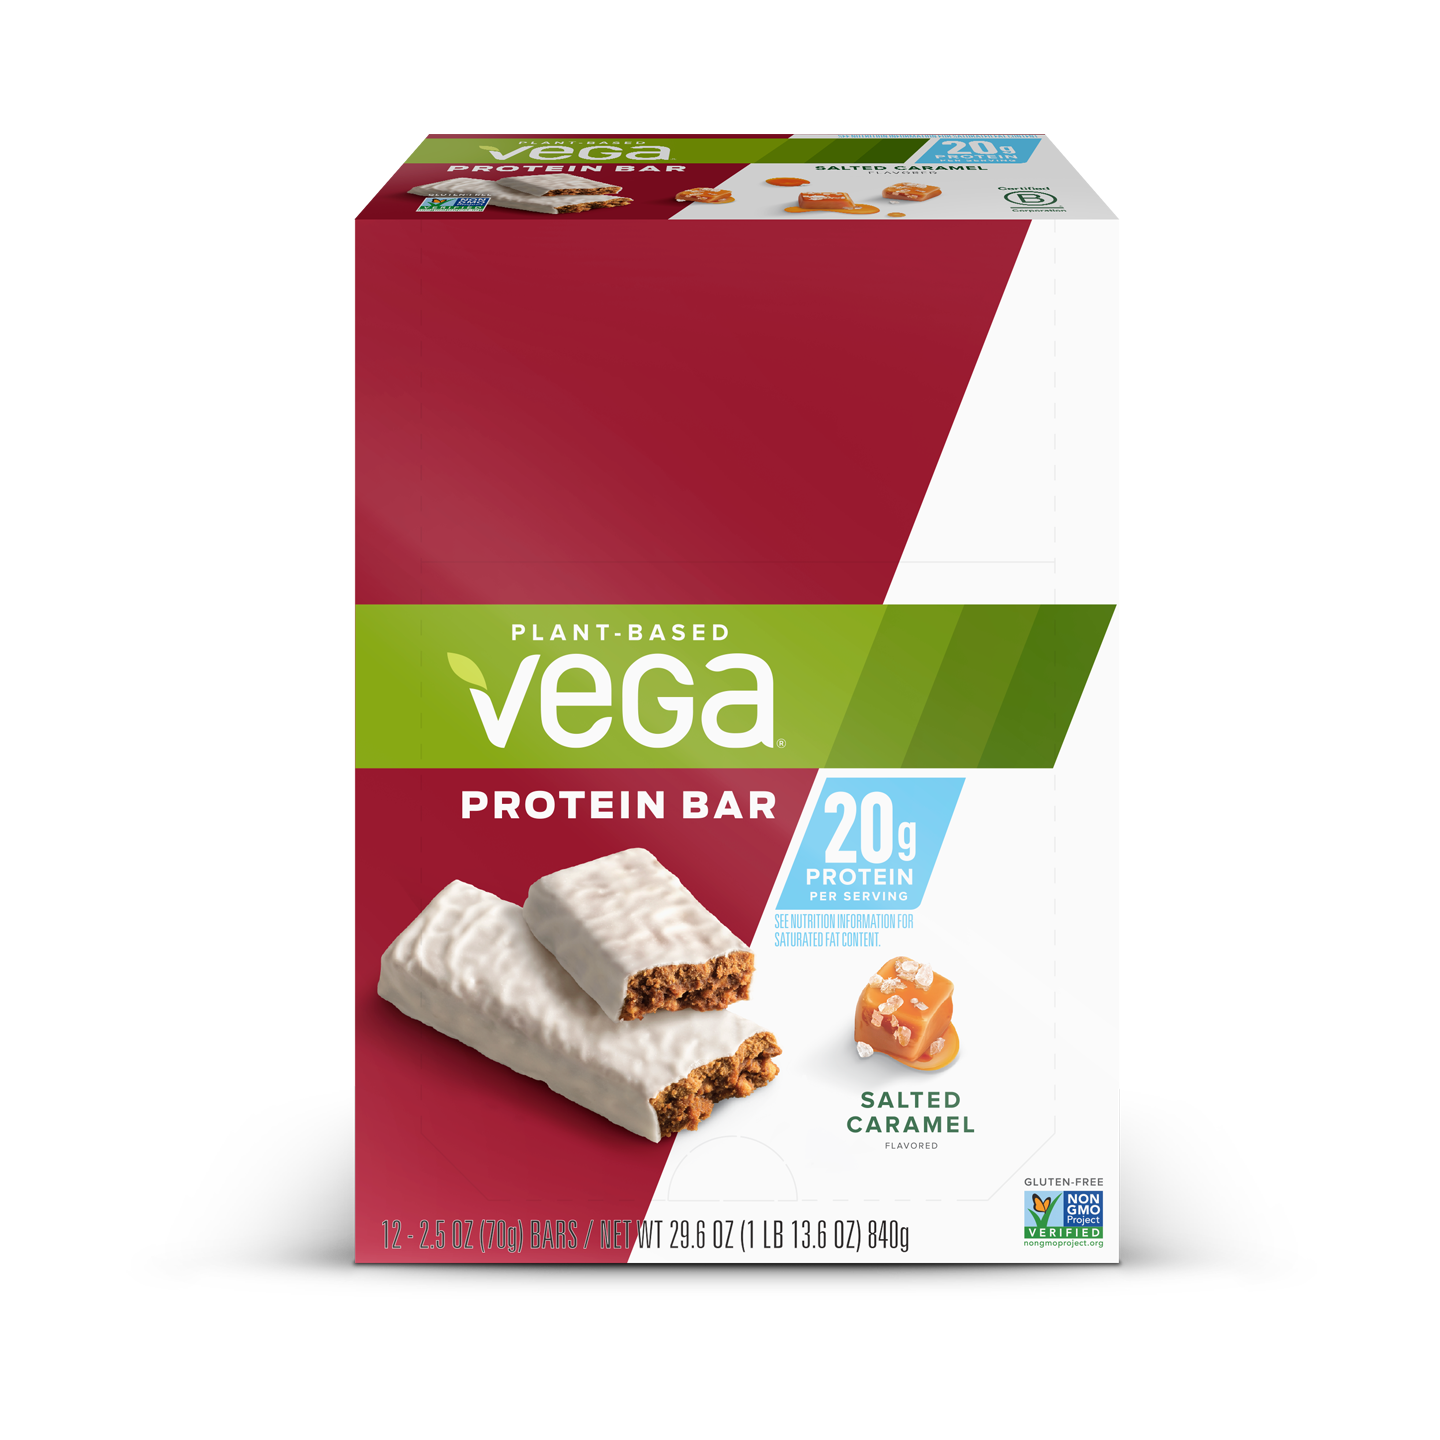 Vega® 20g Protein Bar - Plant-Based Snack